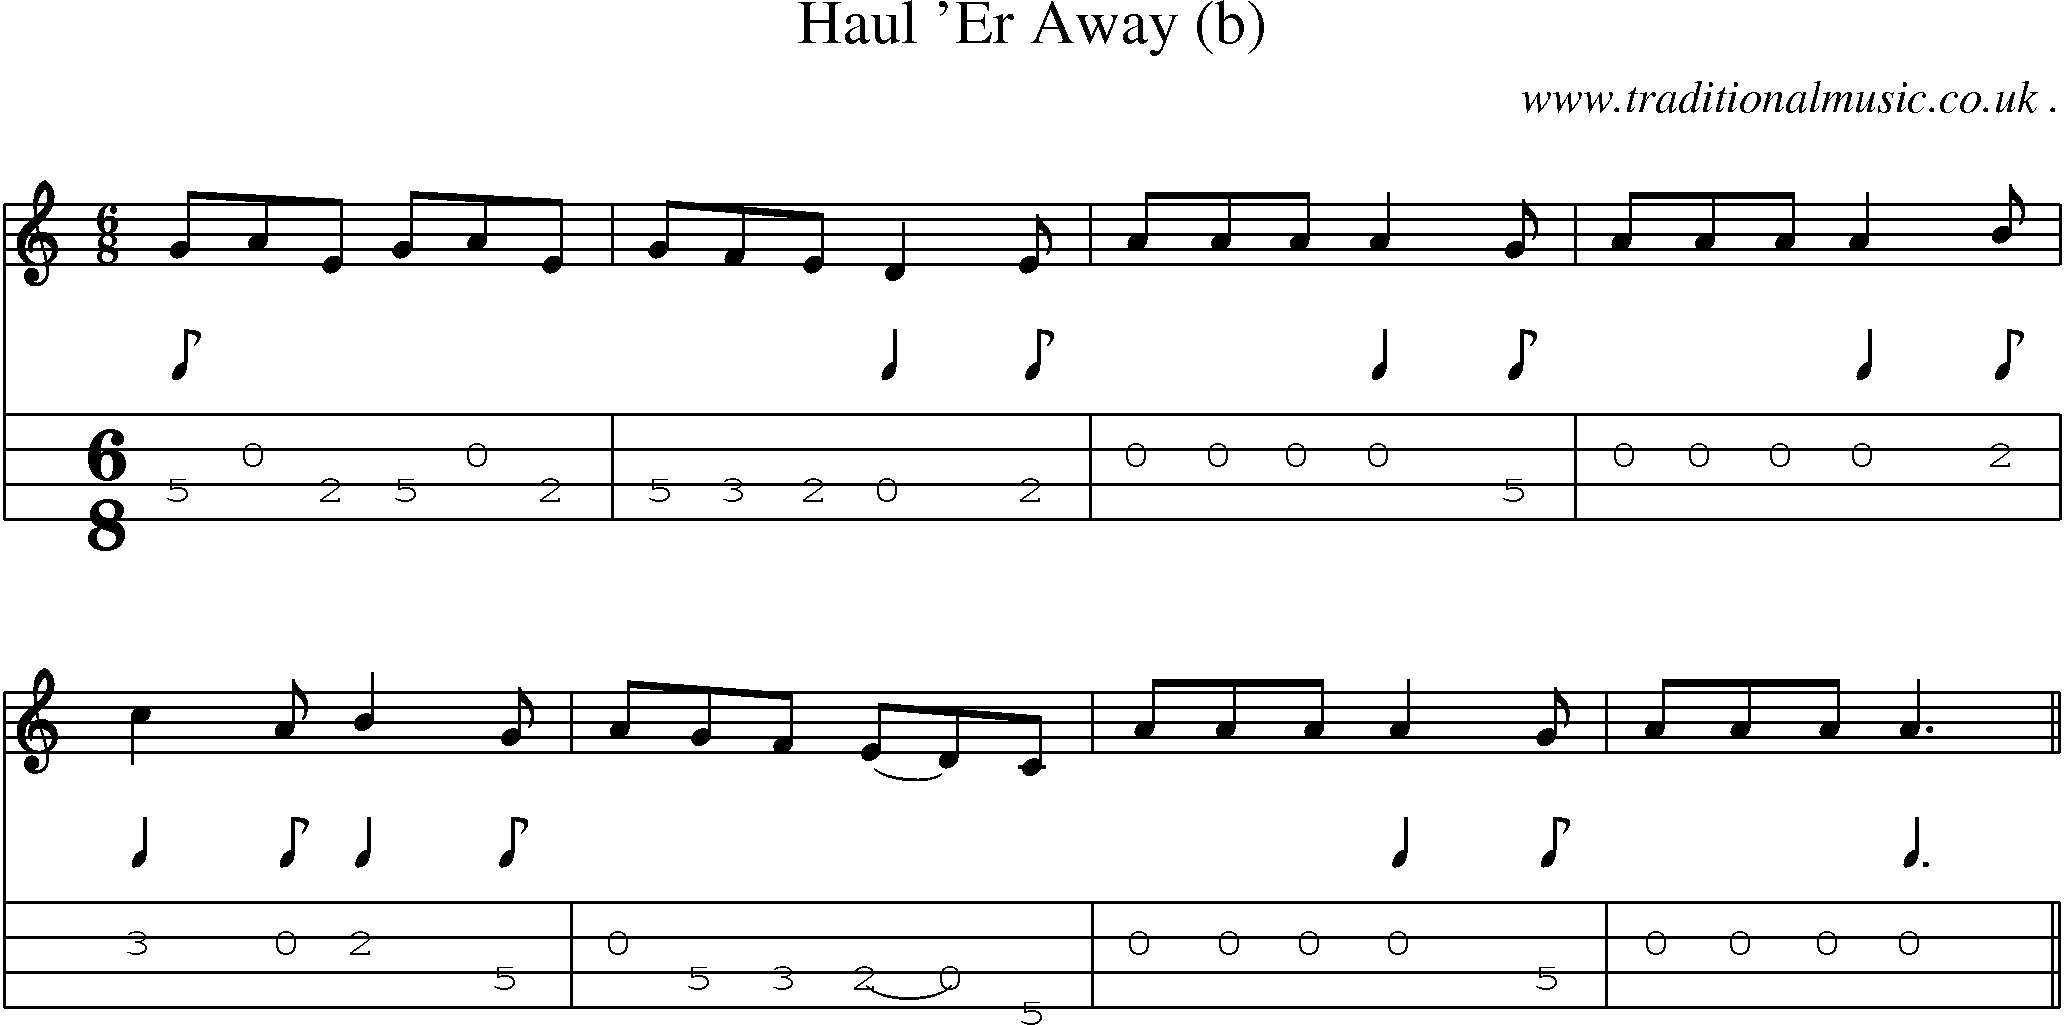 Sheet-Music and Mandolin Tabs for Haul Er Away (b)